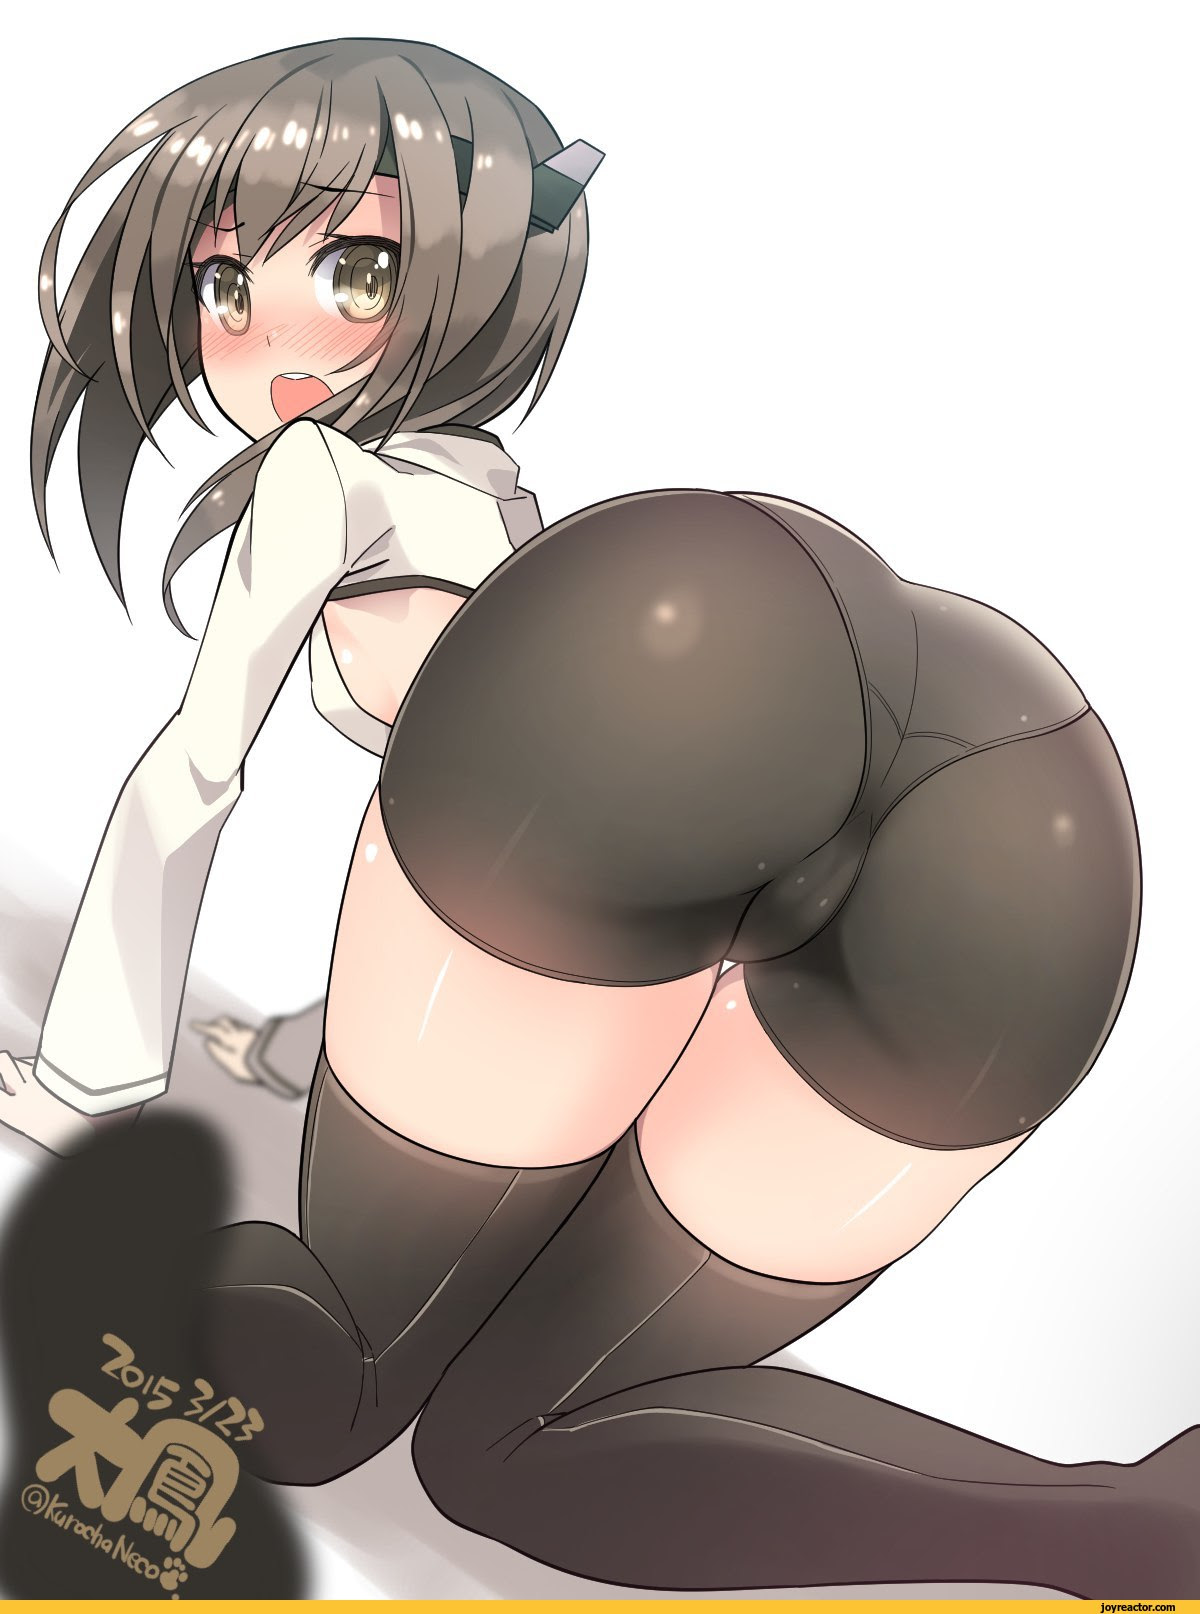 hot anime girl butt | xPornNakedxx